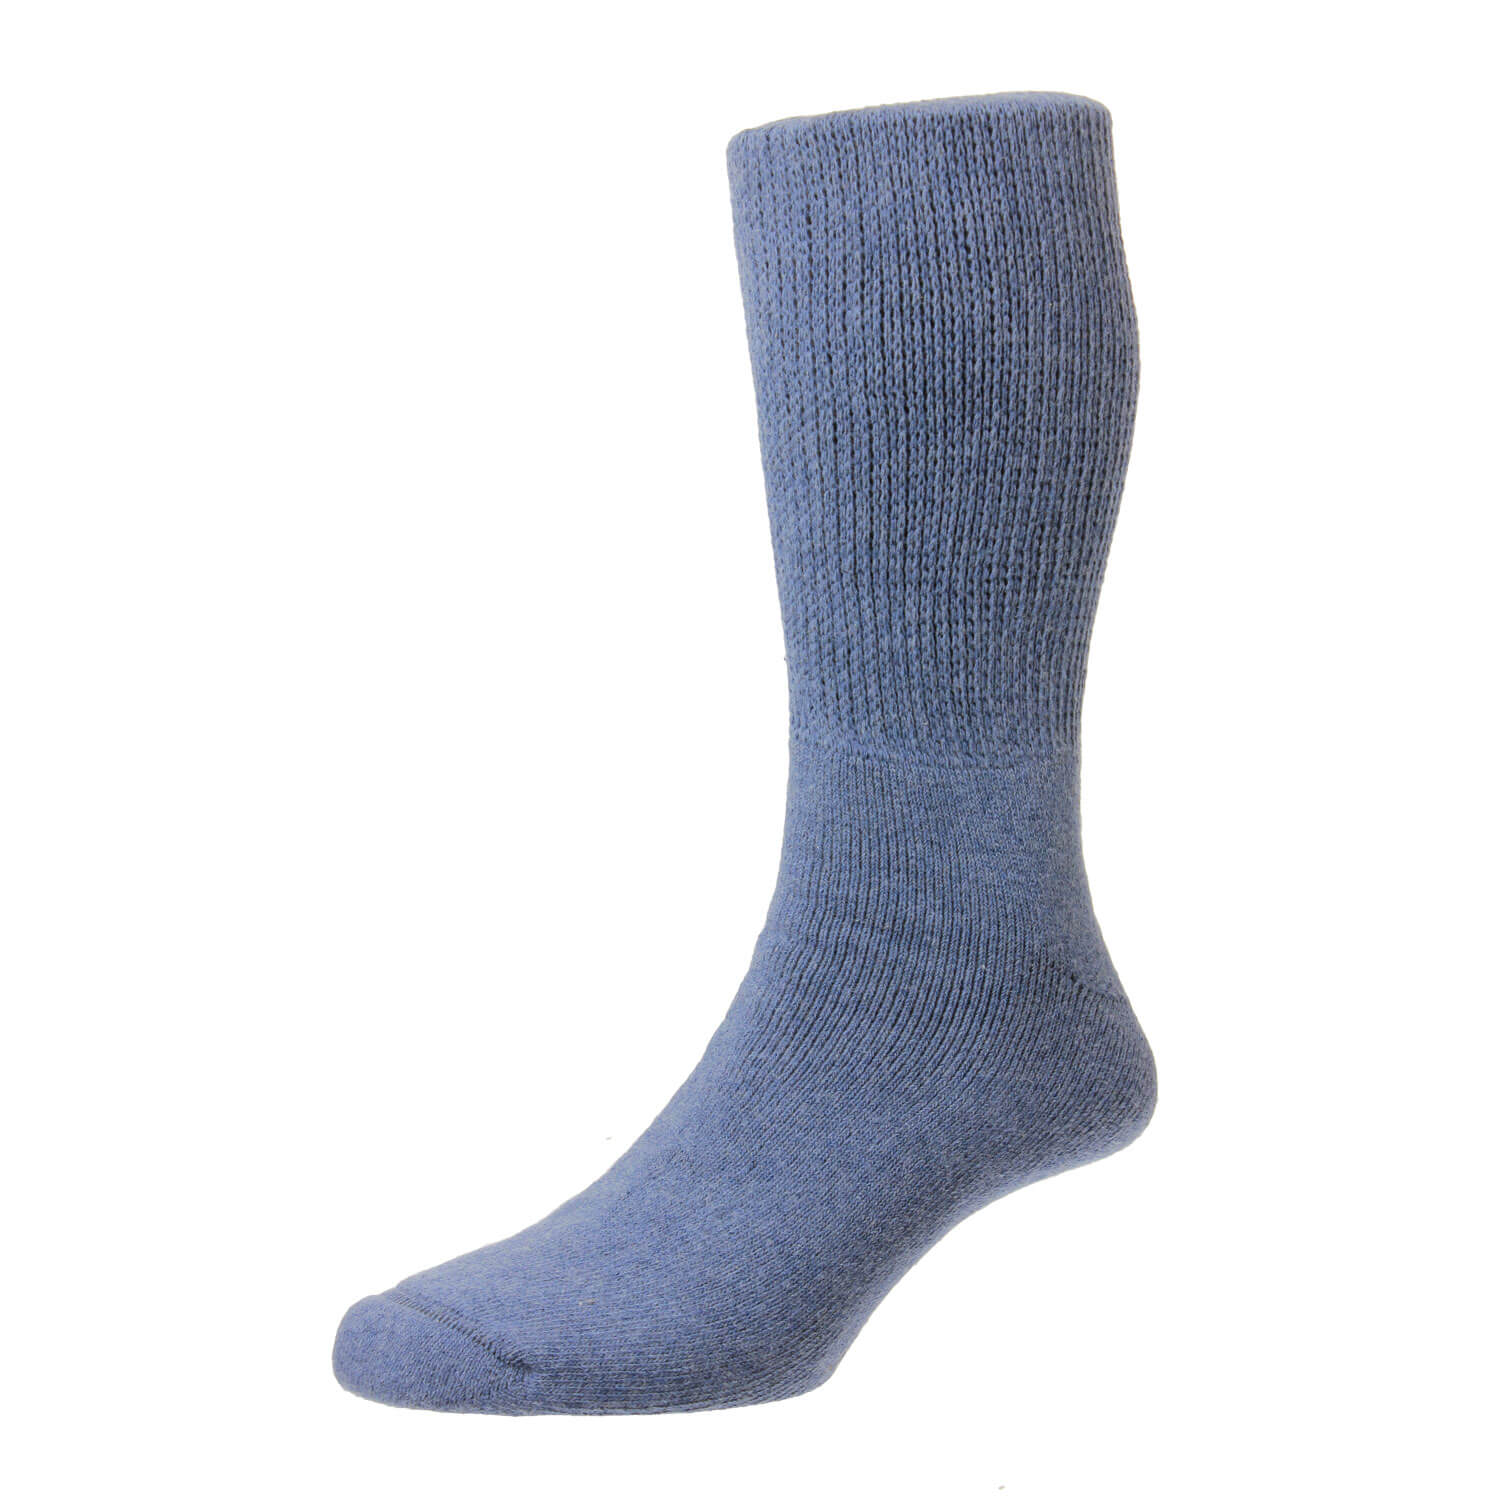 Cotton Diabetic Socks - Denim